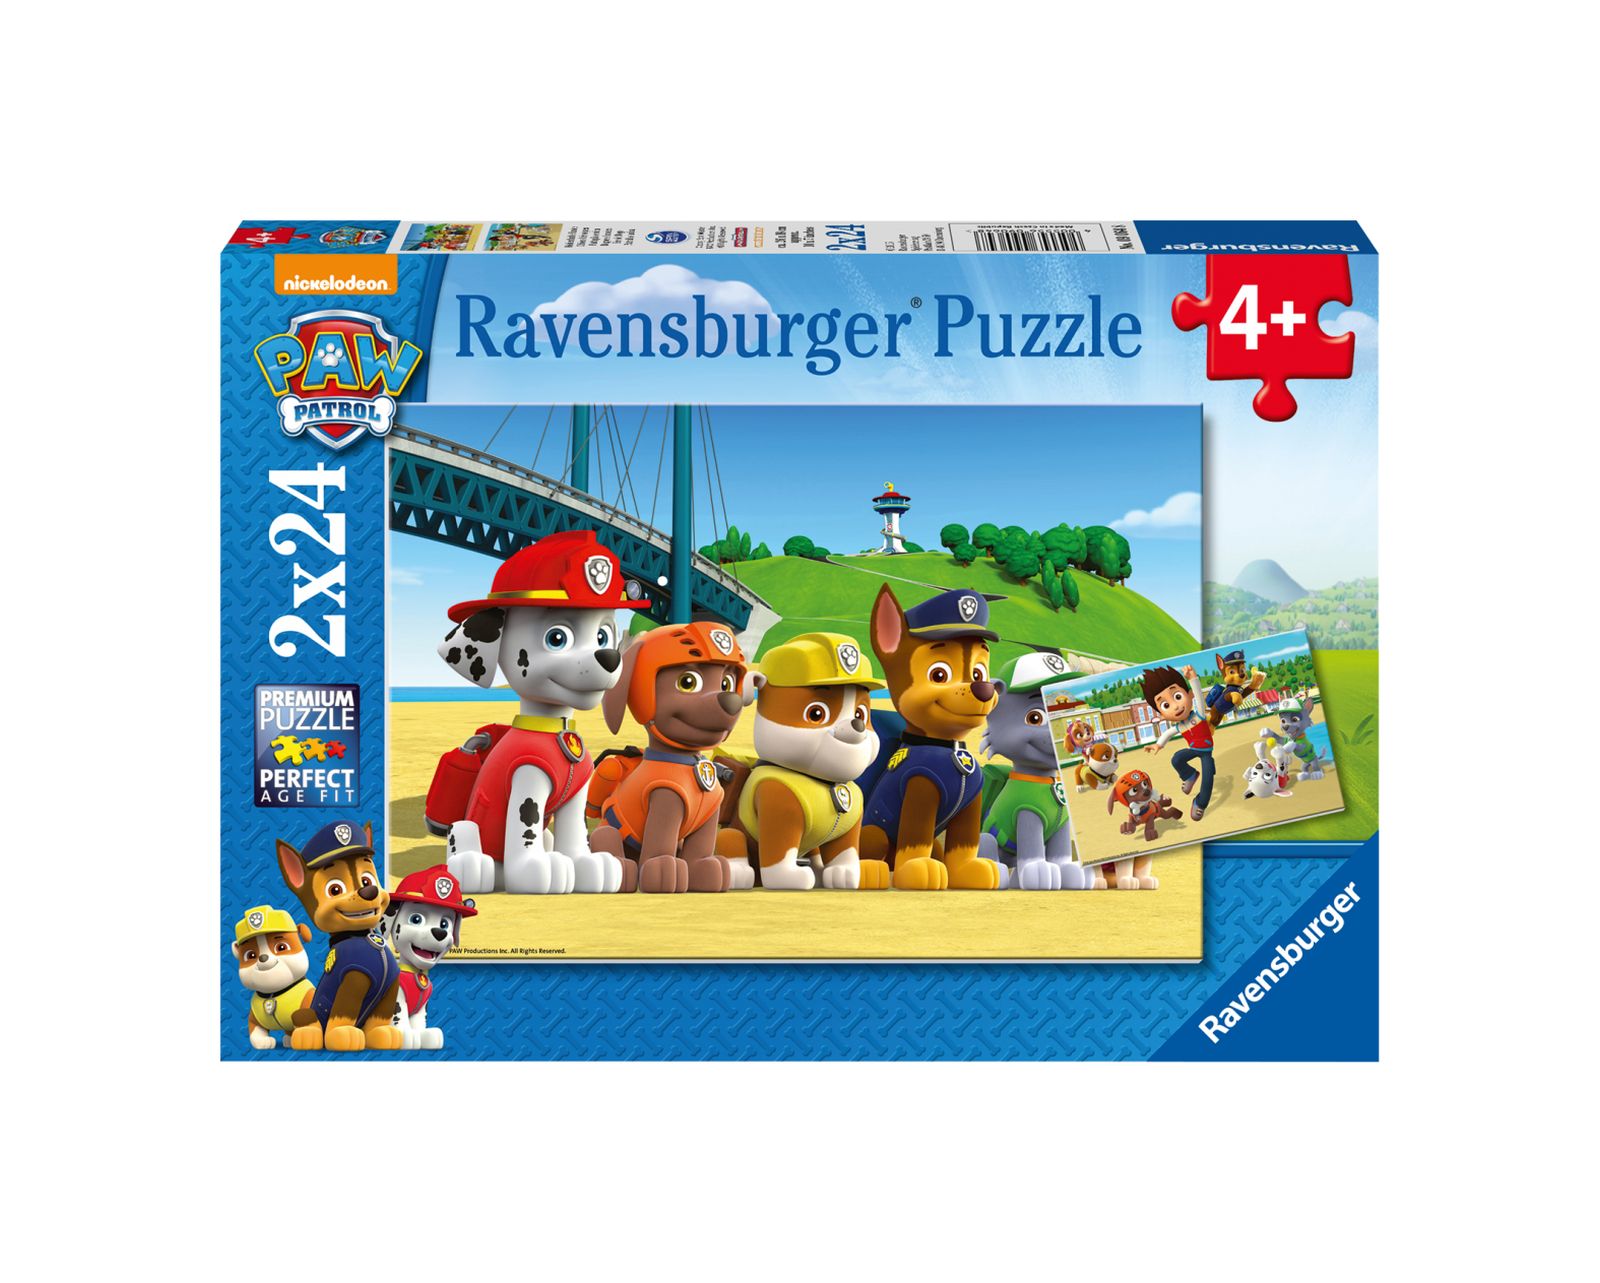 Ravensburger puzzle 2x24 pezzi - paw patrol a - RAVENSBURGER, Paw Patrol